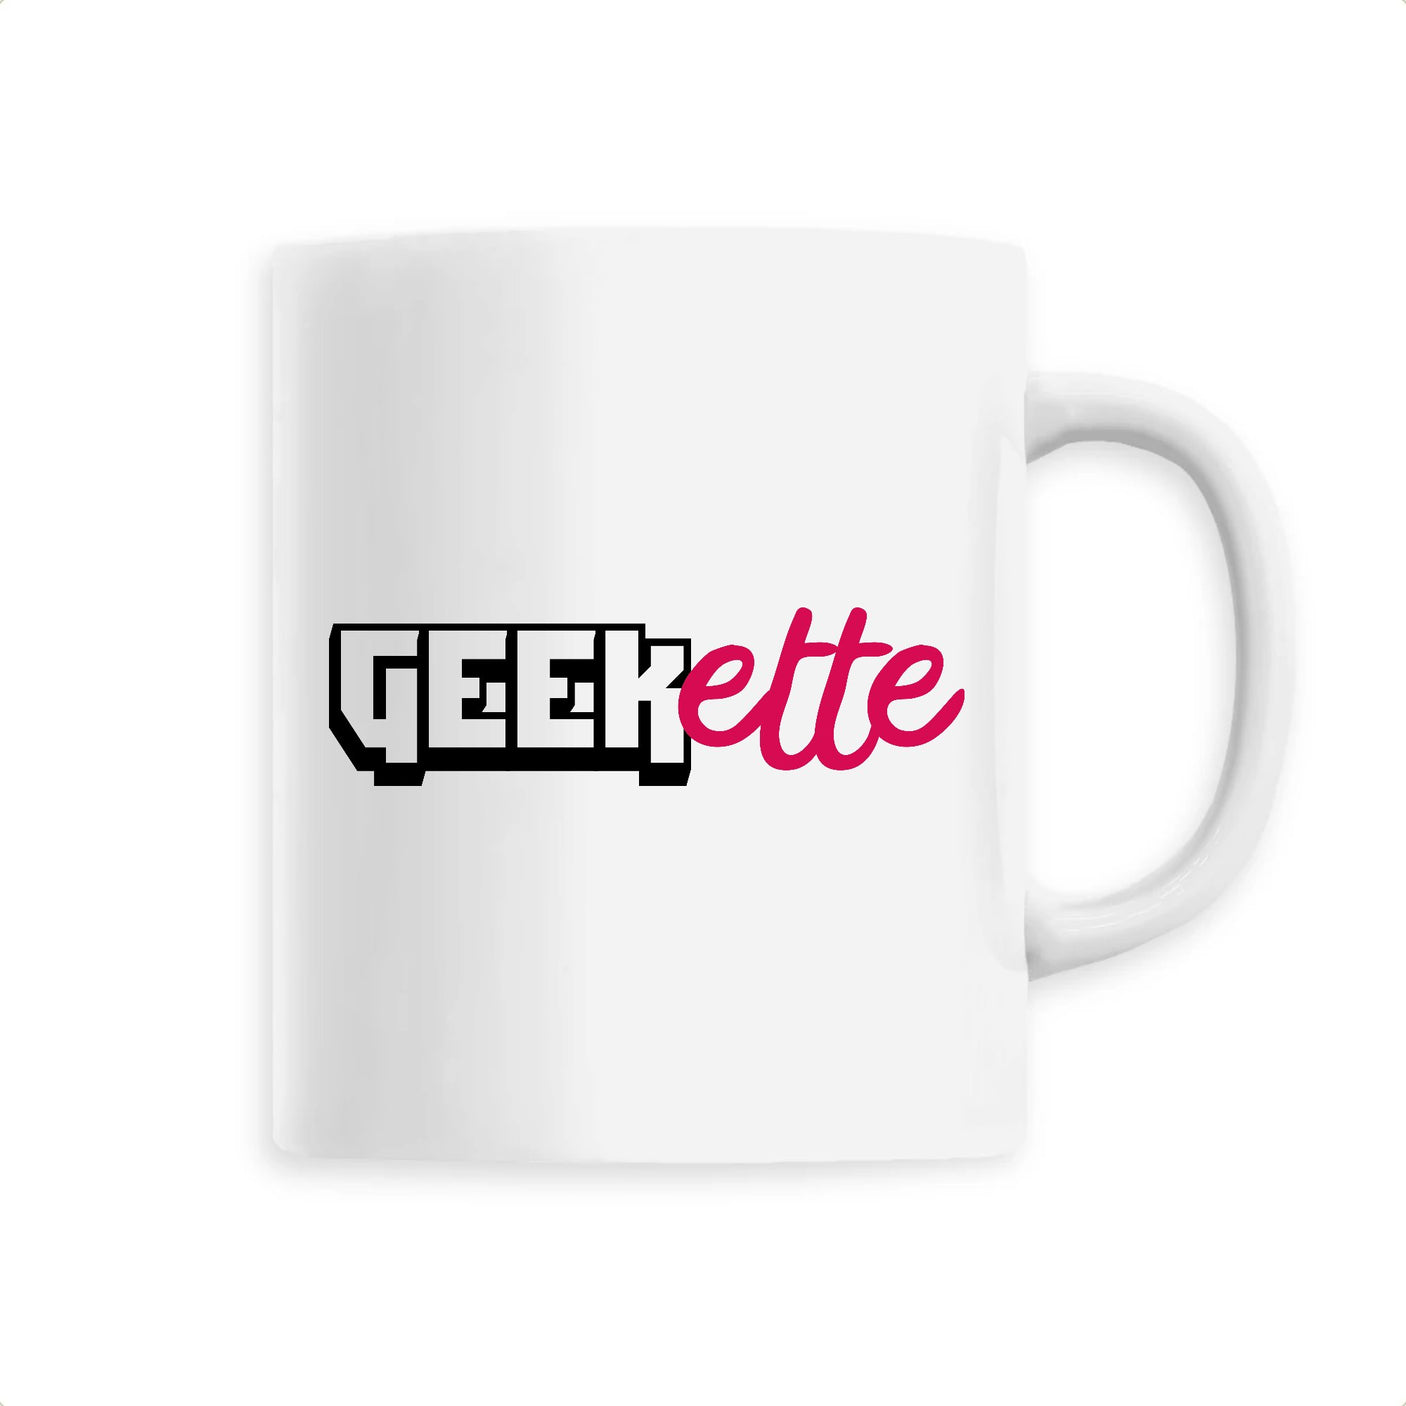 Mug Geekette 